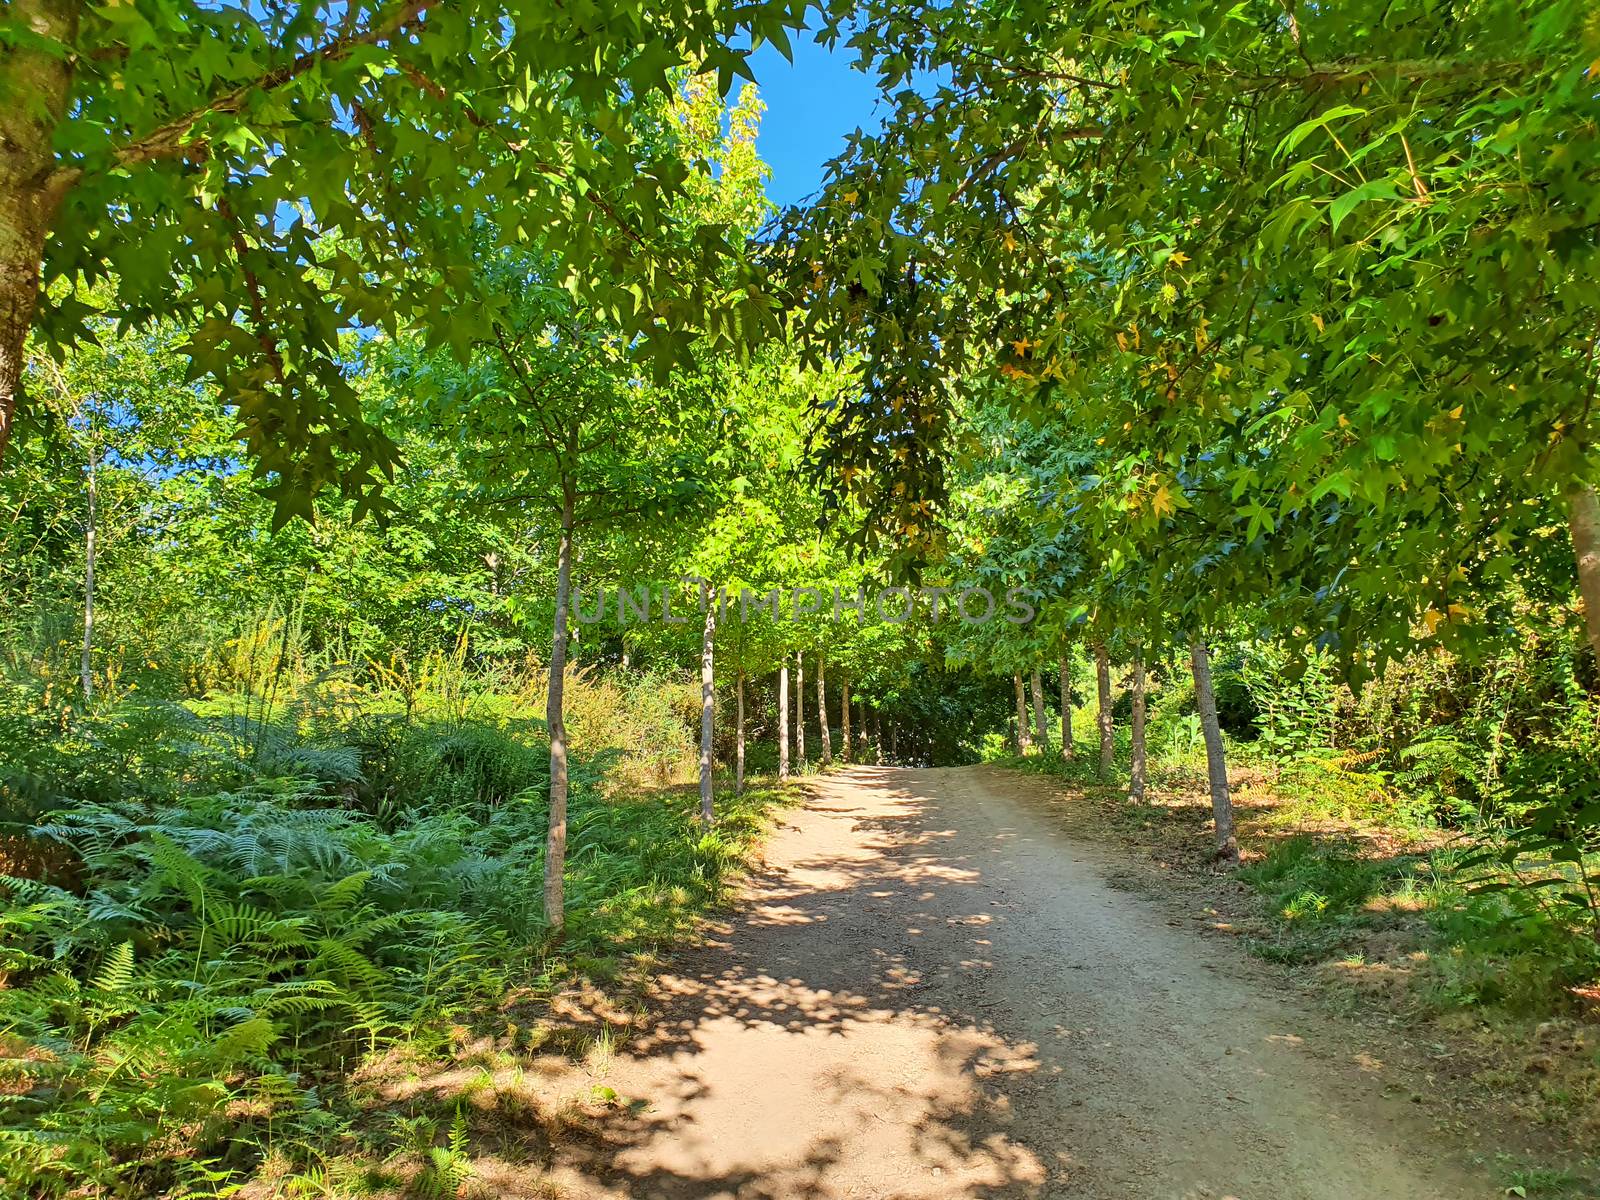 Walking path in green forest, summer scene